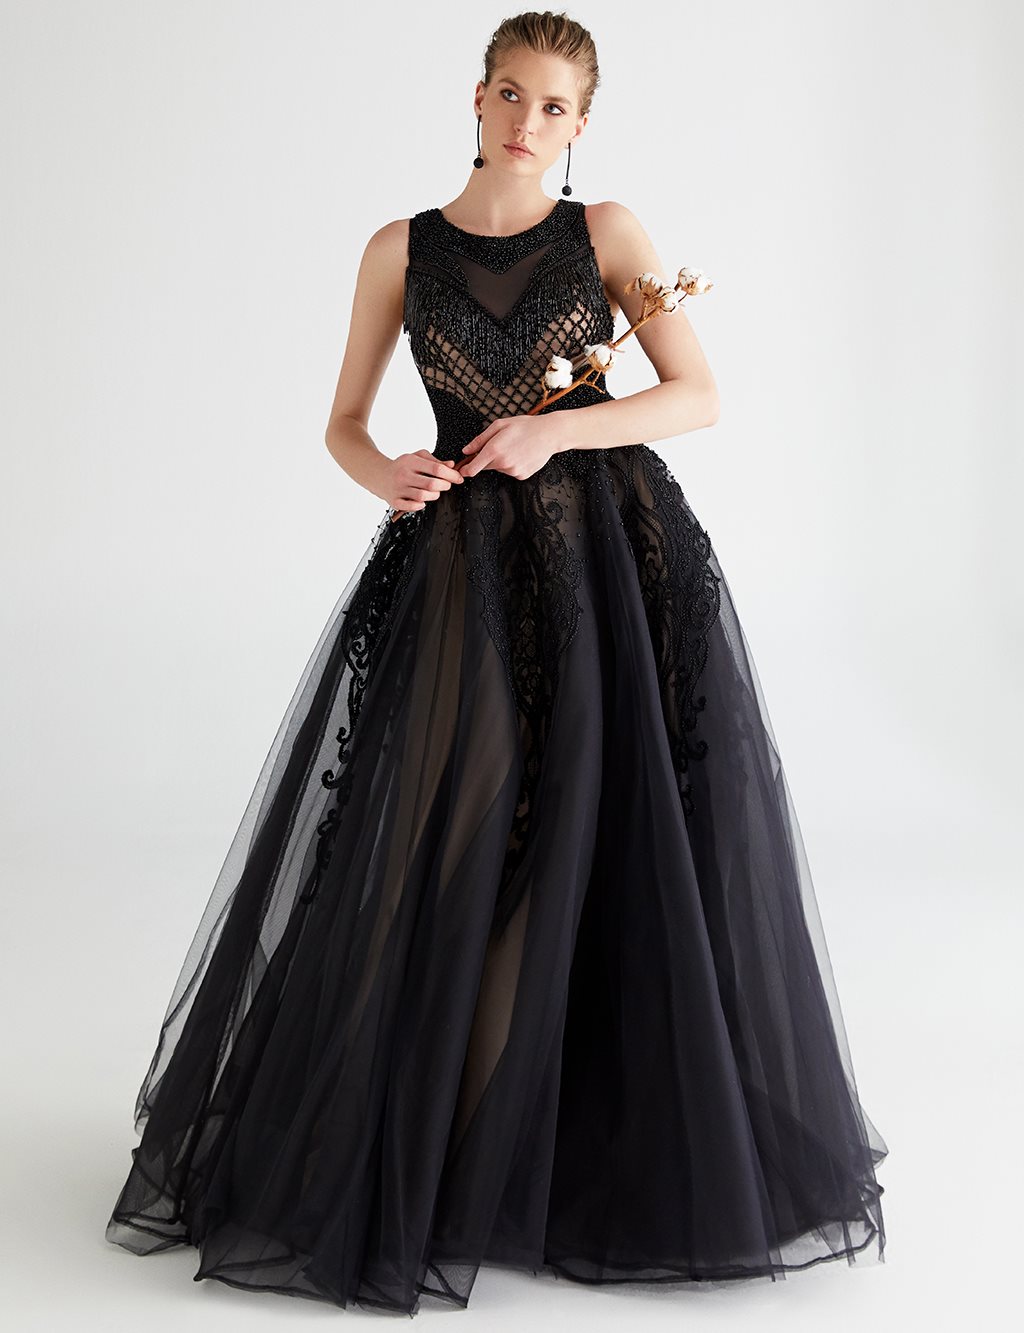 TIARA Tasseled, Embroidered Evening Dress B9 26096 Black